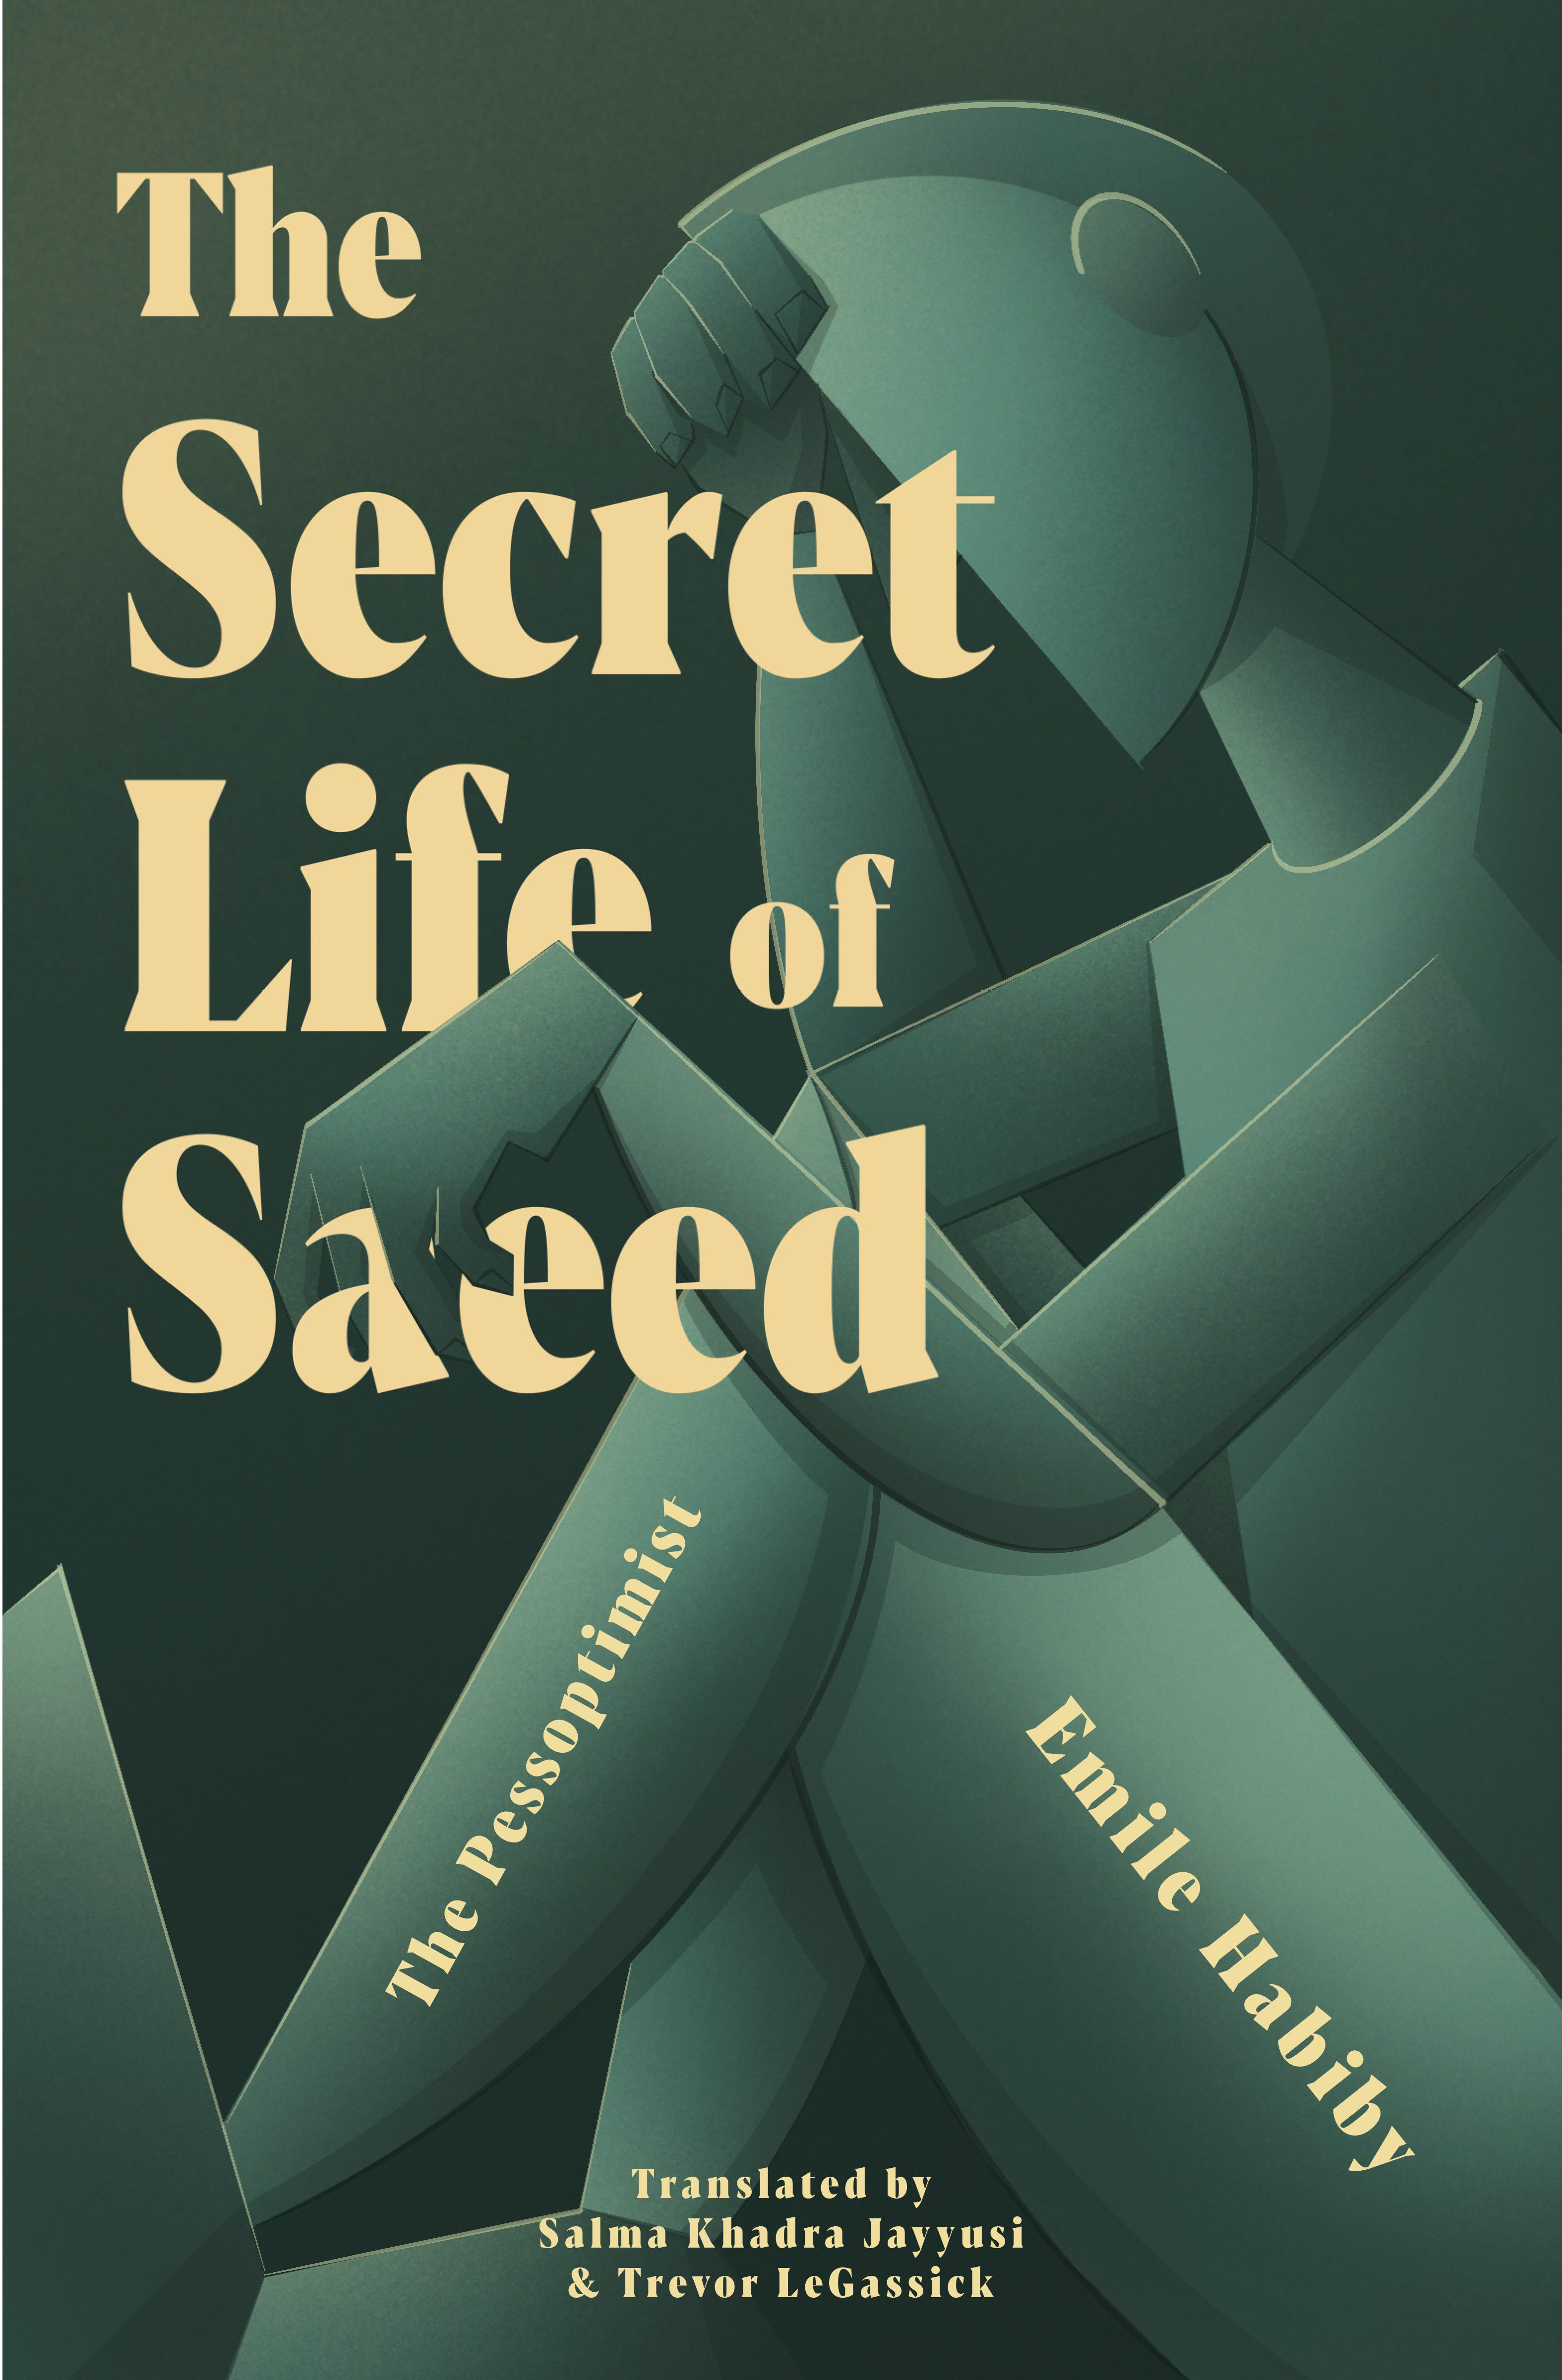 The Secret Life of Saeed